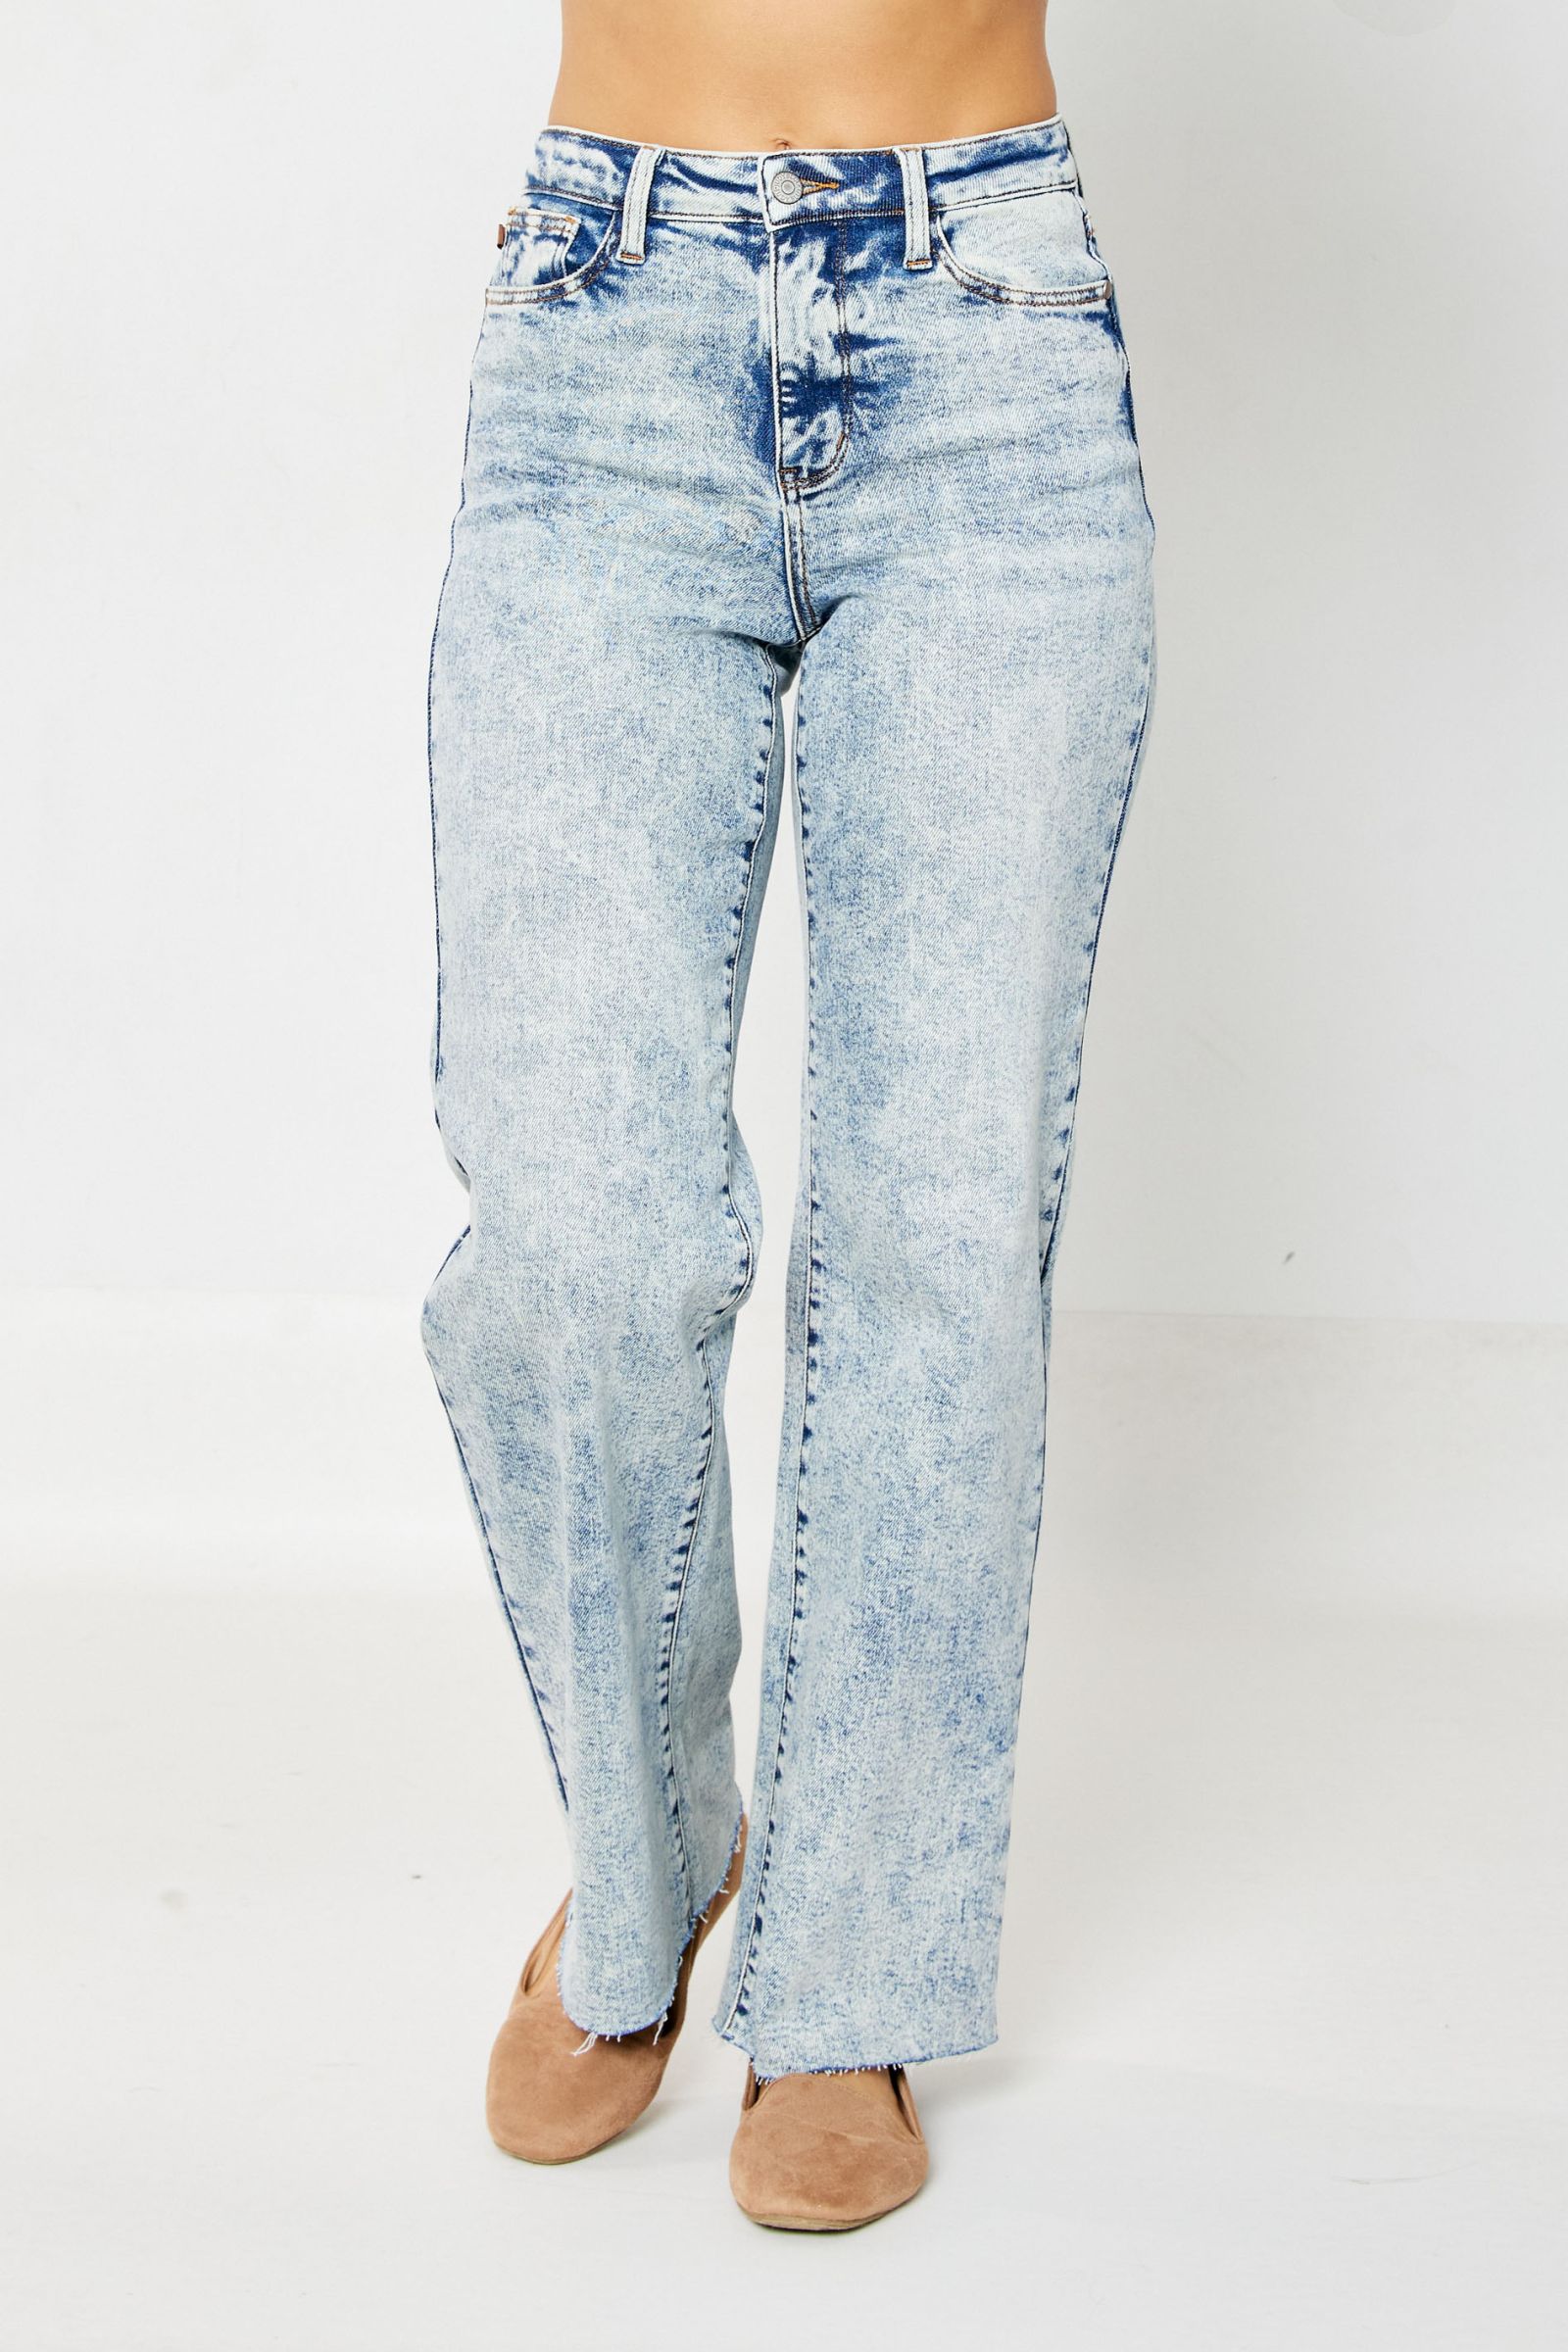 Judy Blue Jeans 88828